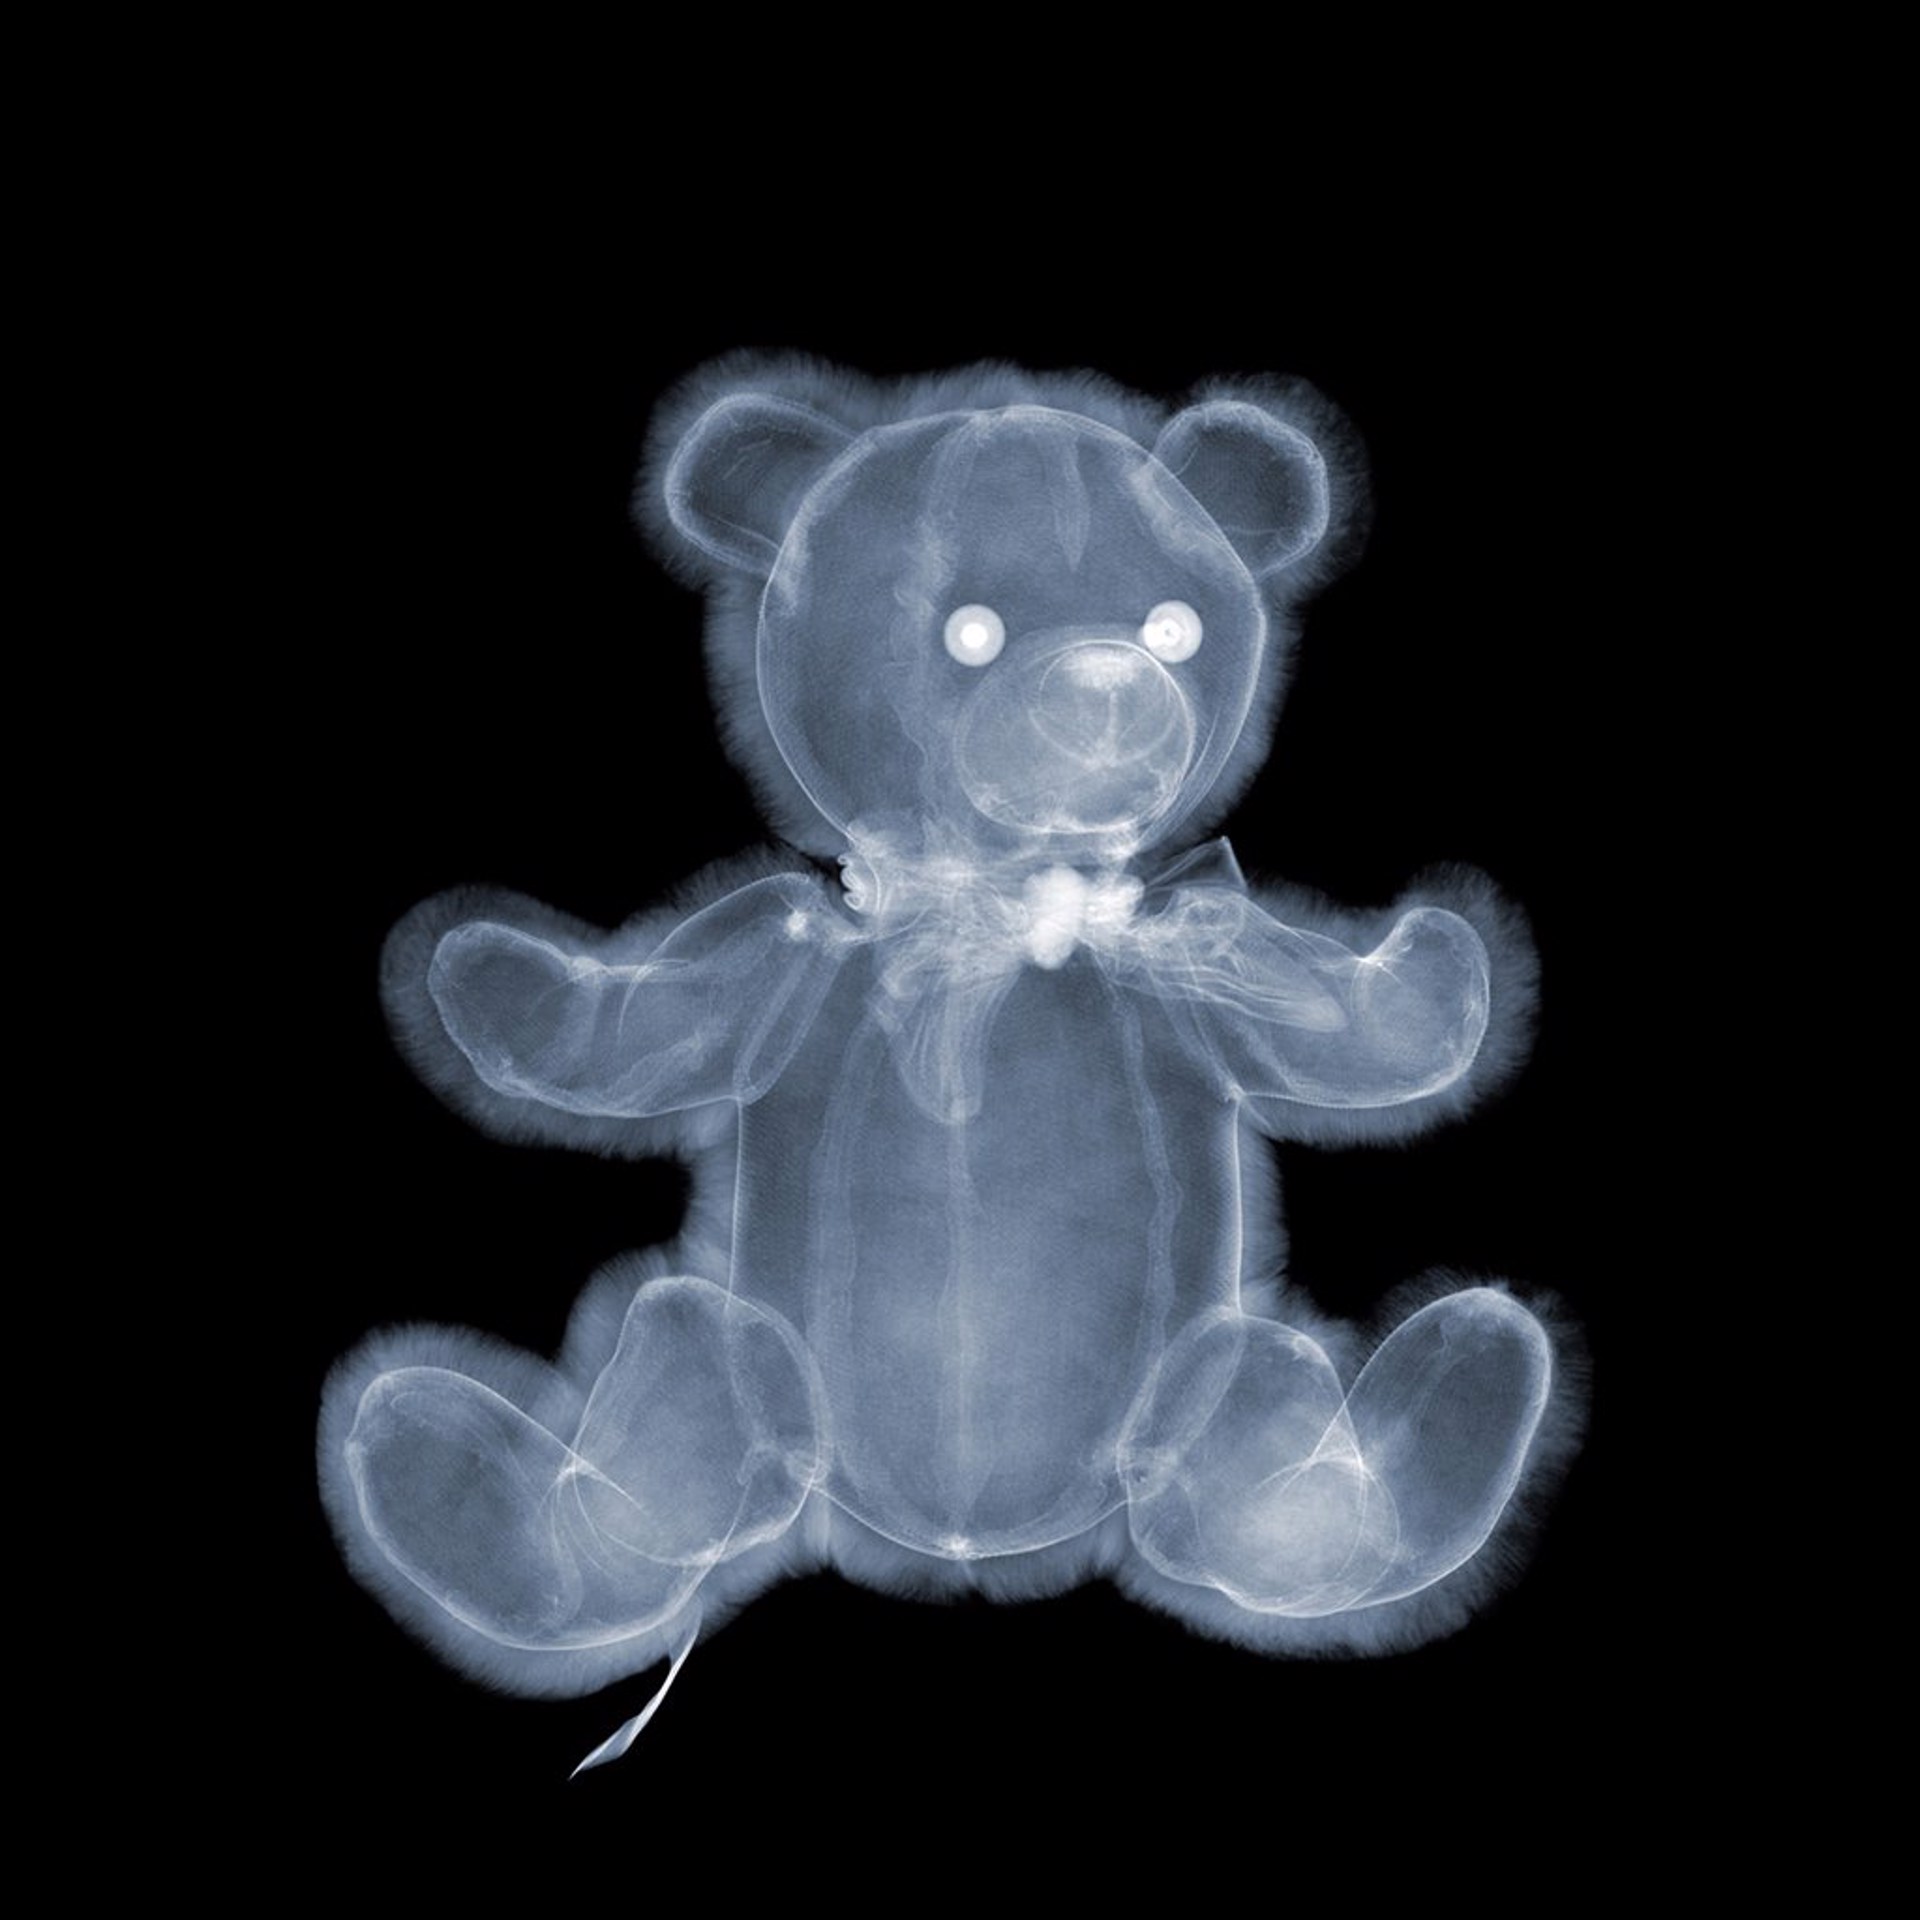 Fluffy Teddy Bear by Nick Veasey